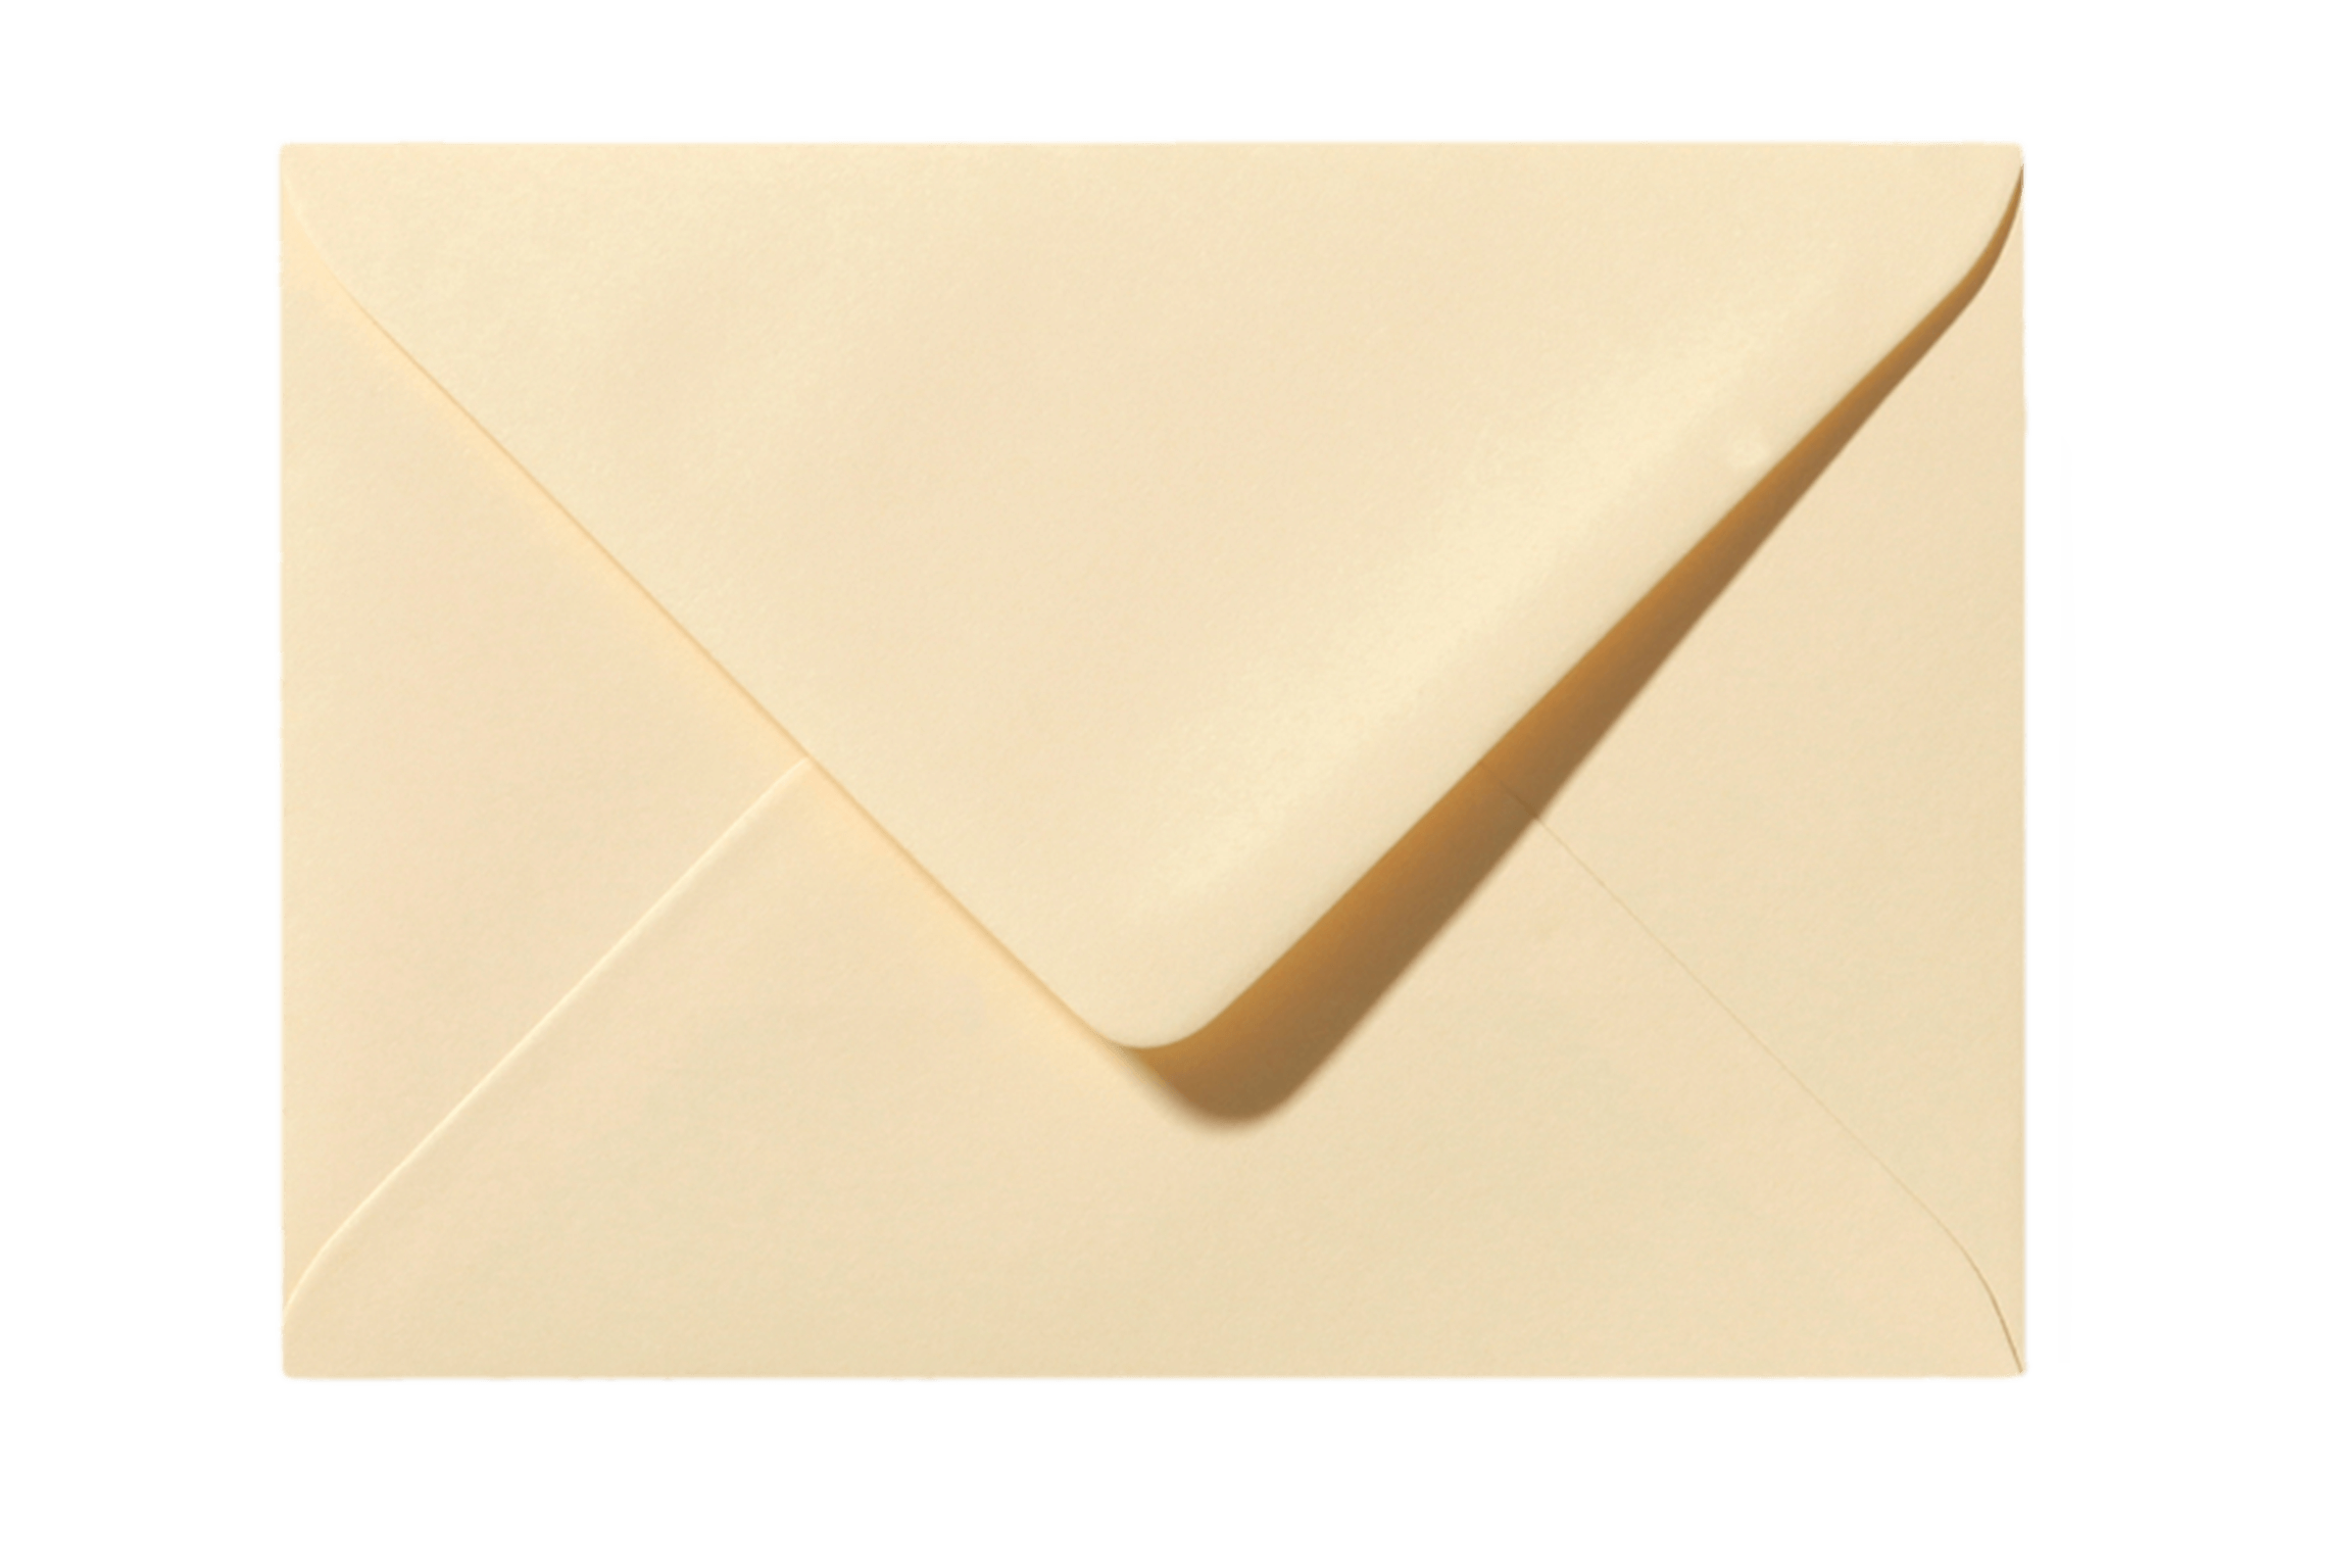 Scharnier Bemiddelaar Editor Beige Envelop met Puntklep | Gelegenheid — Designcards